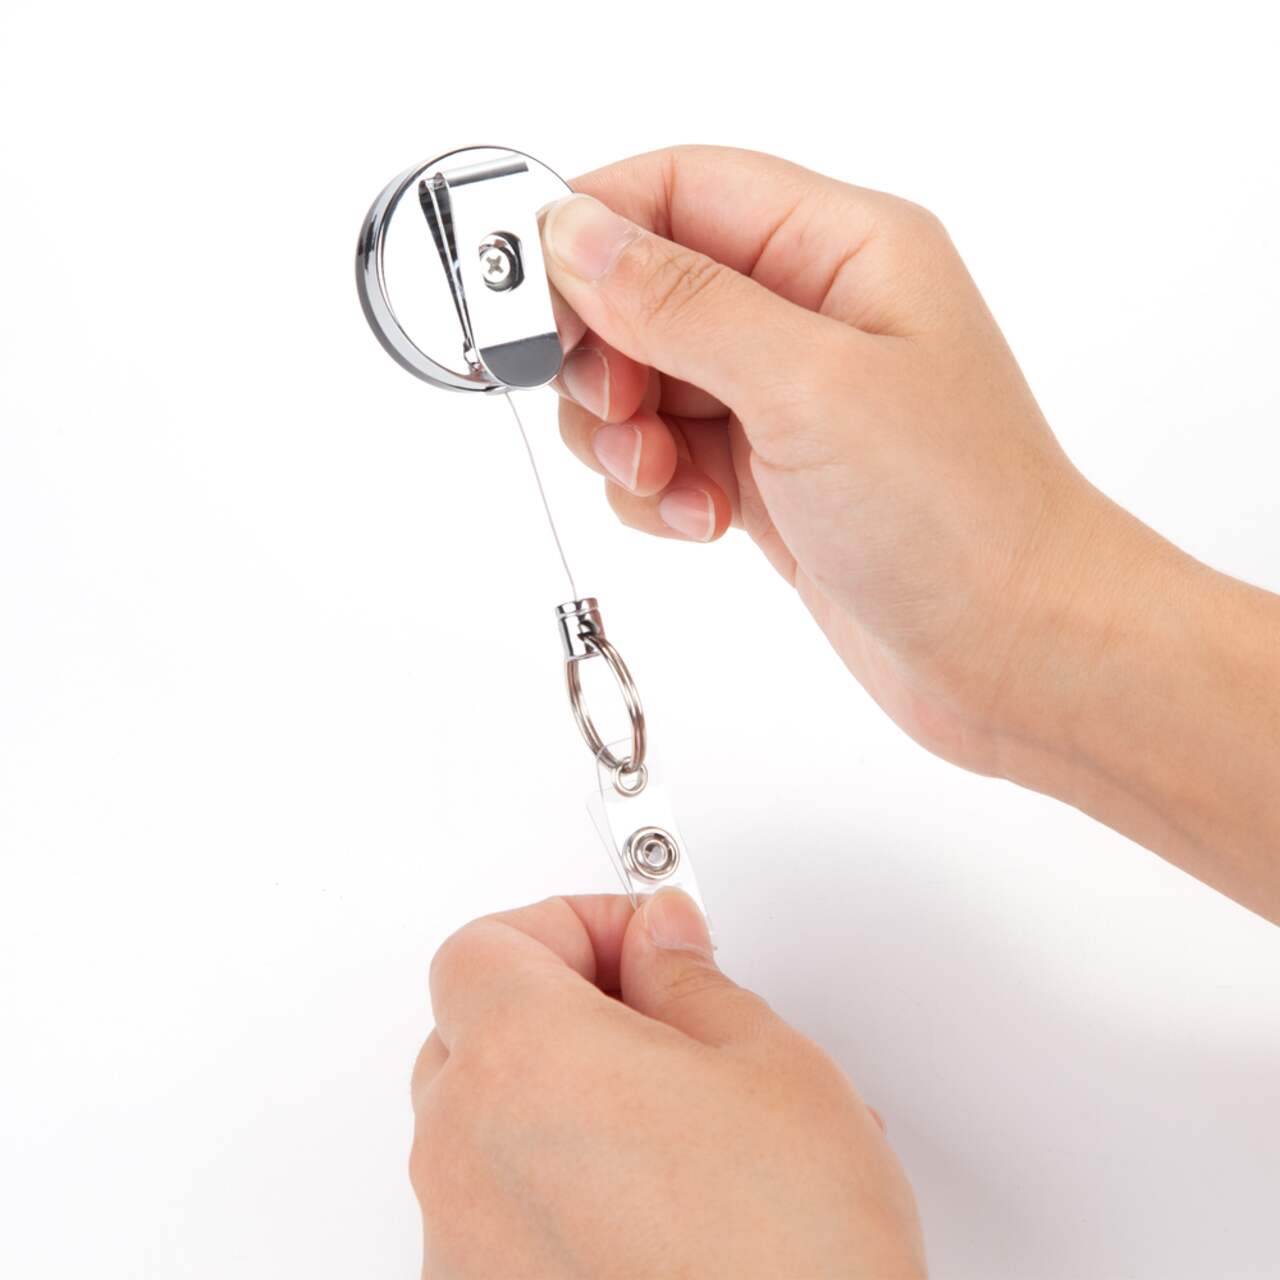 AutoTrends Retractable Keychain & Badge Holder